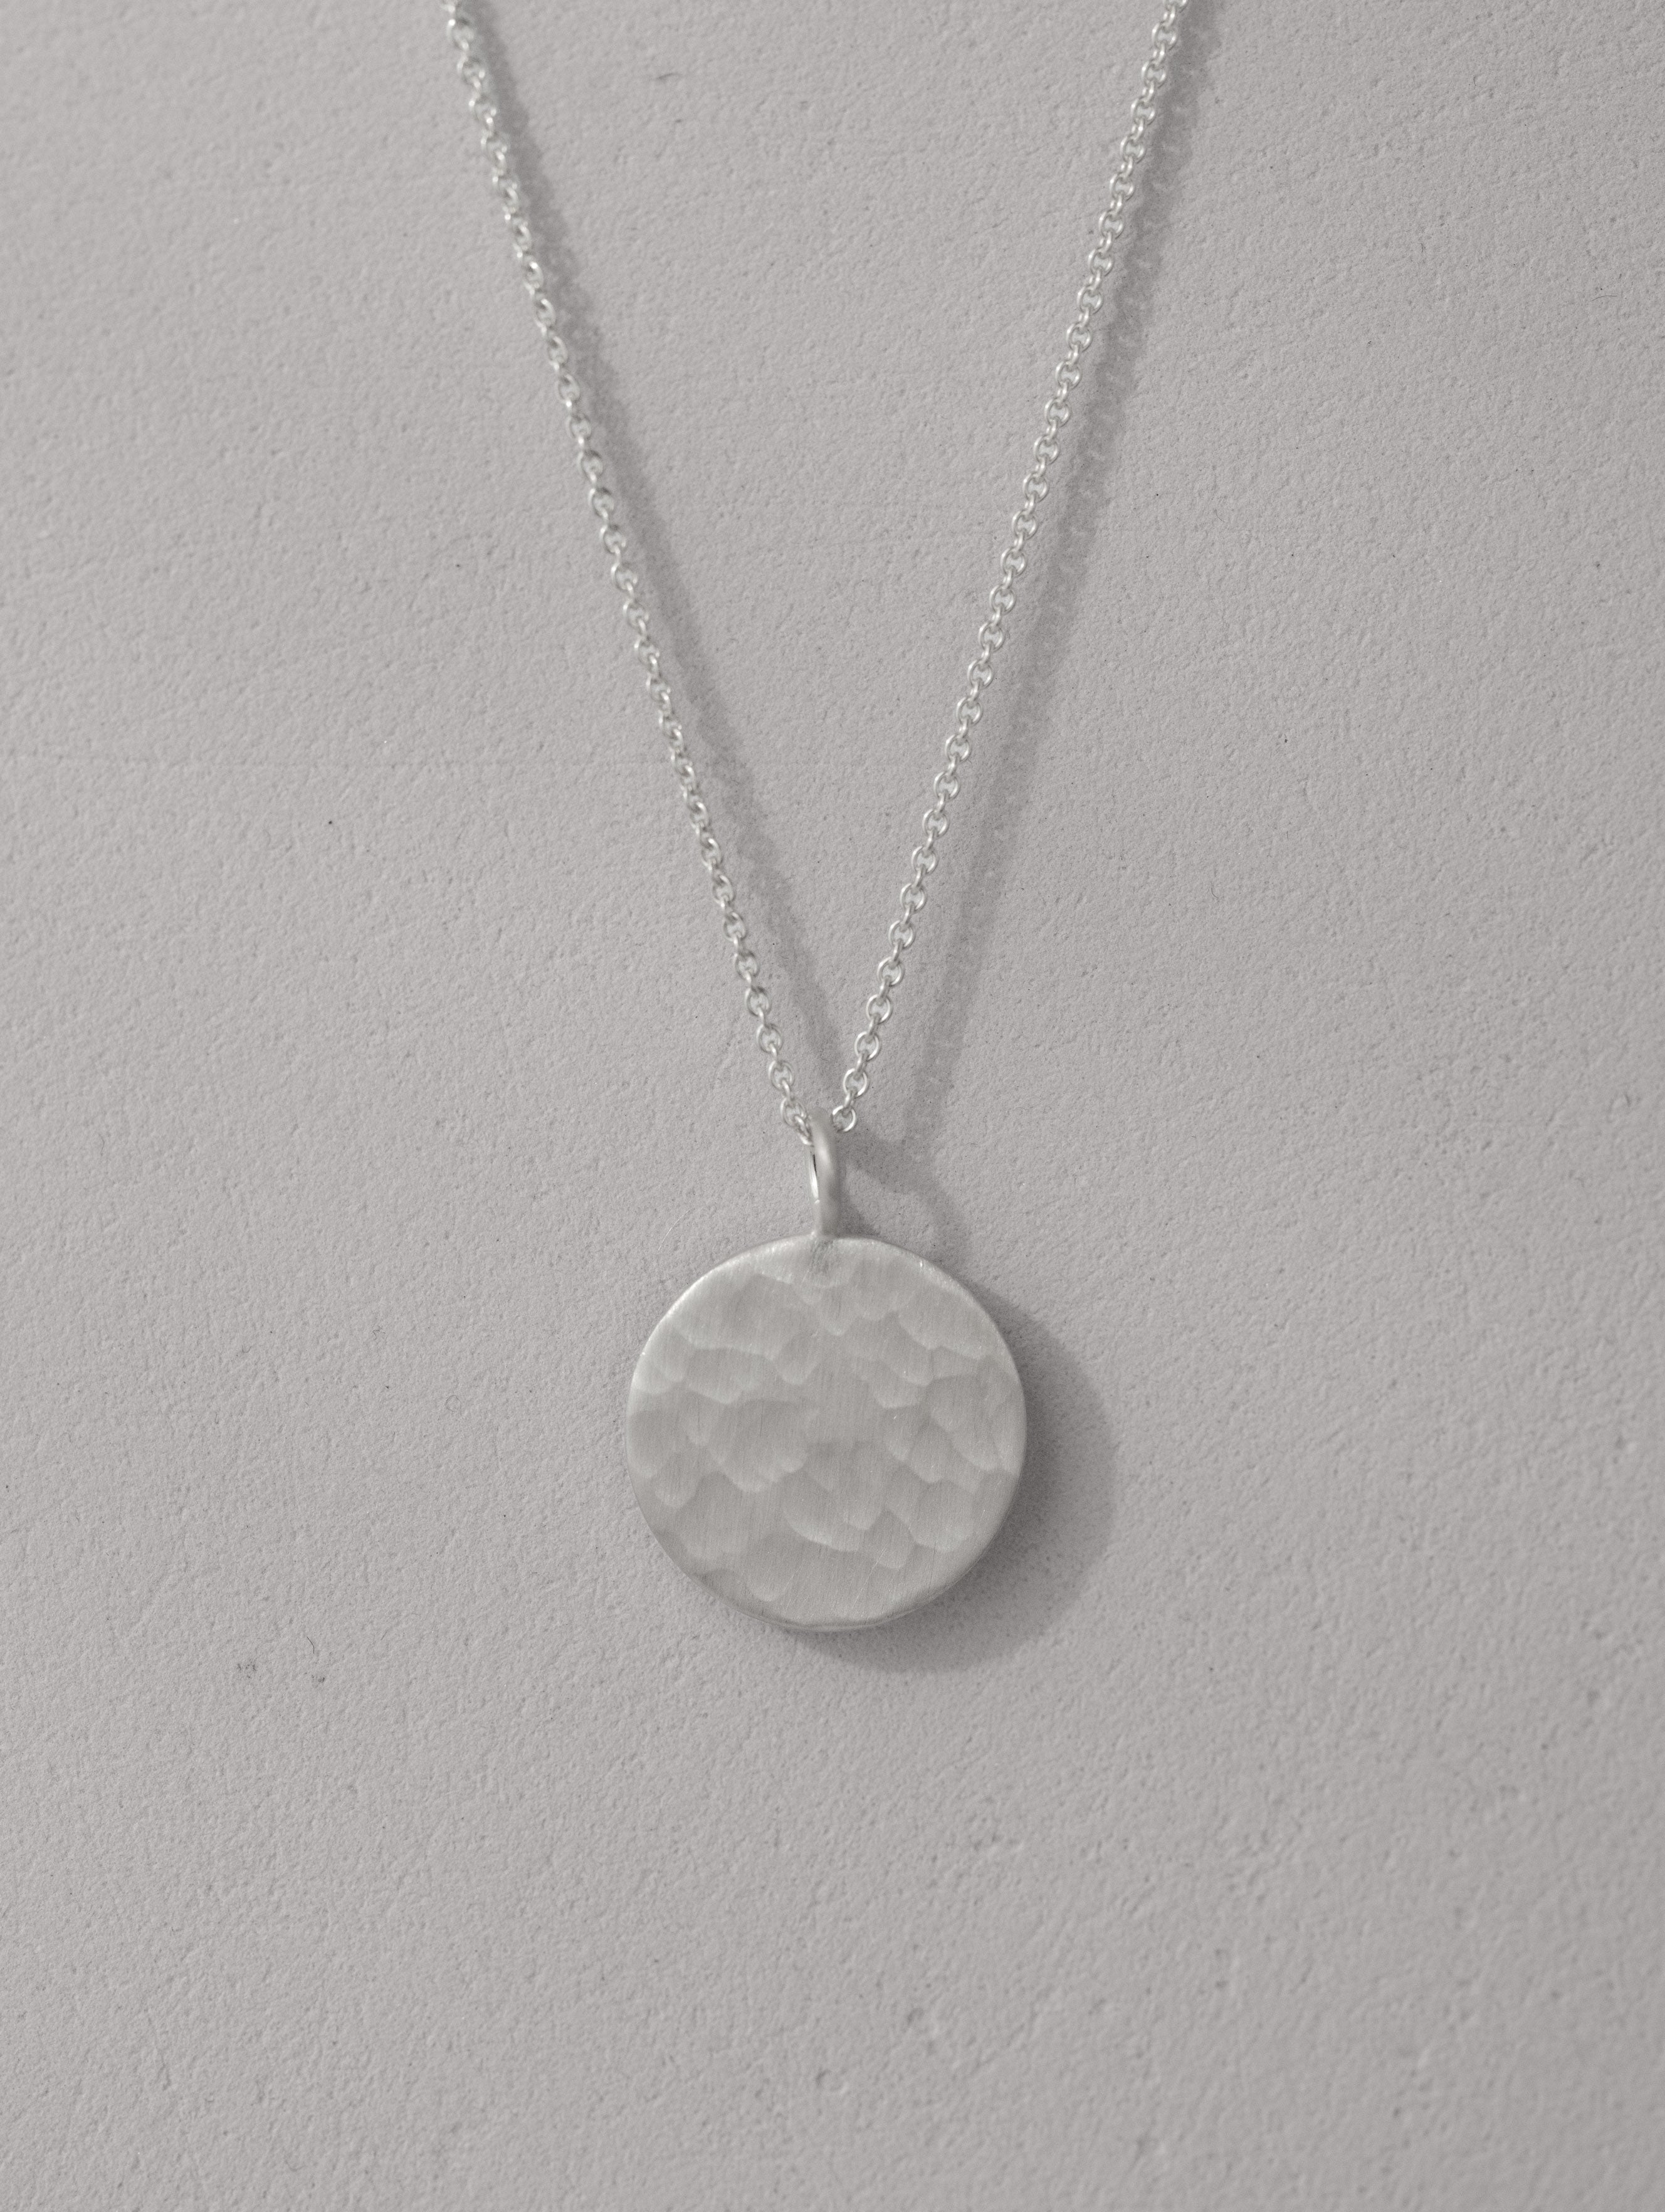 Shape Necklace - Round size M